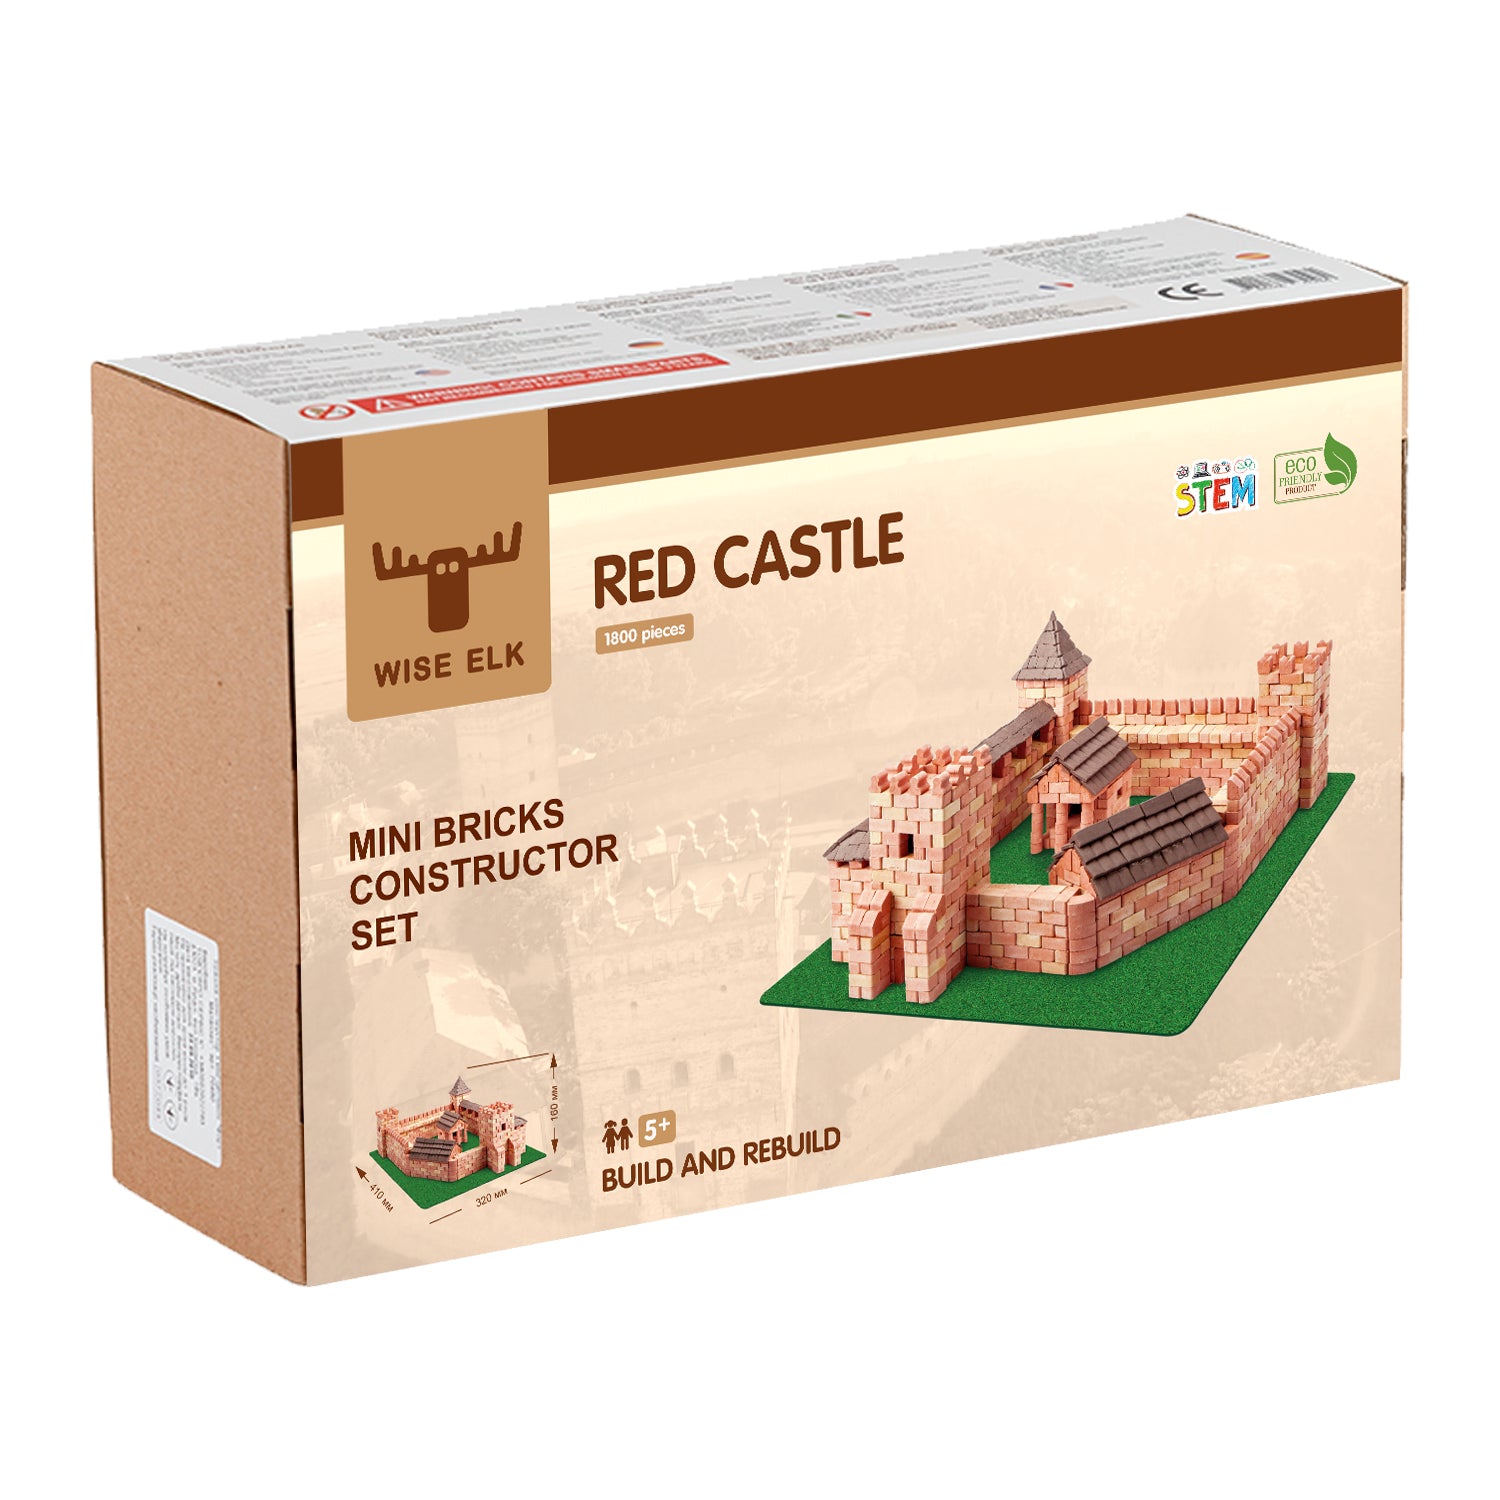 Wise Elk™ Red Castle | 1800 pcs.